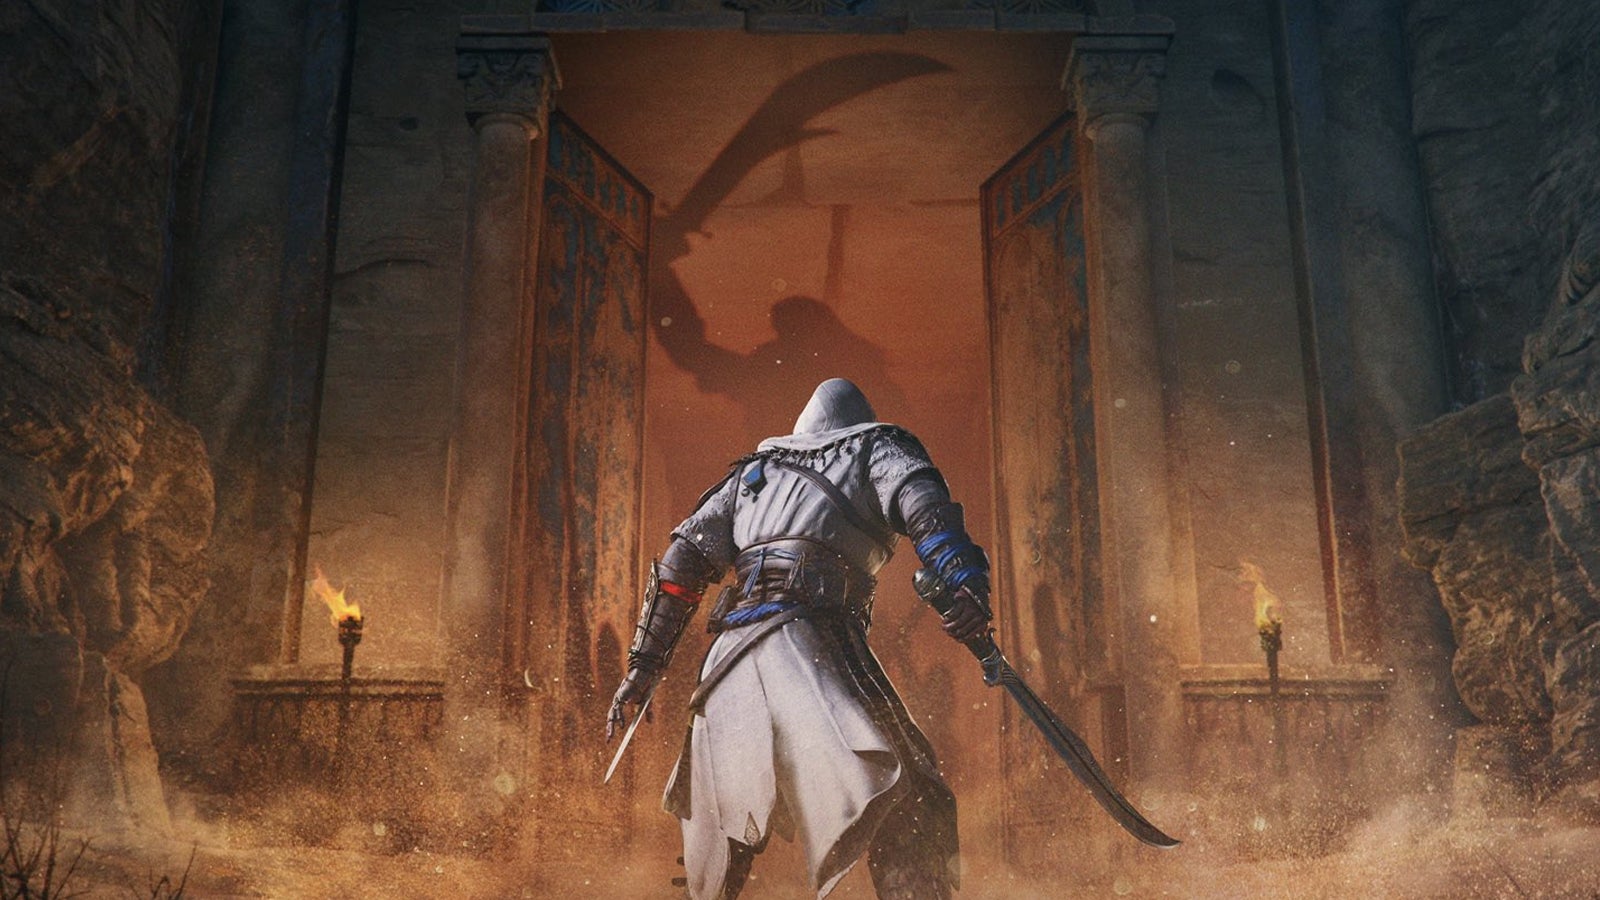 Assassin's Creed Mirage artwork.